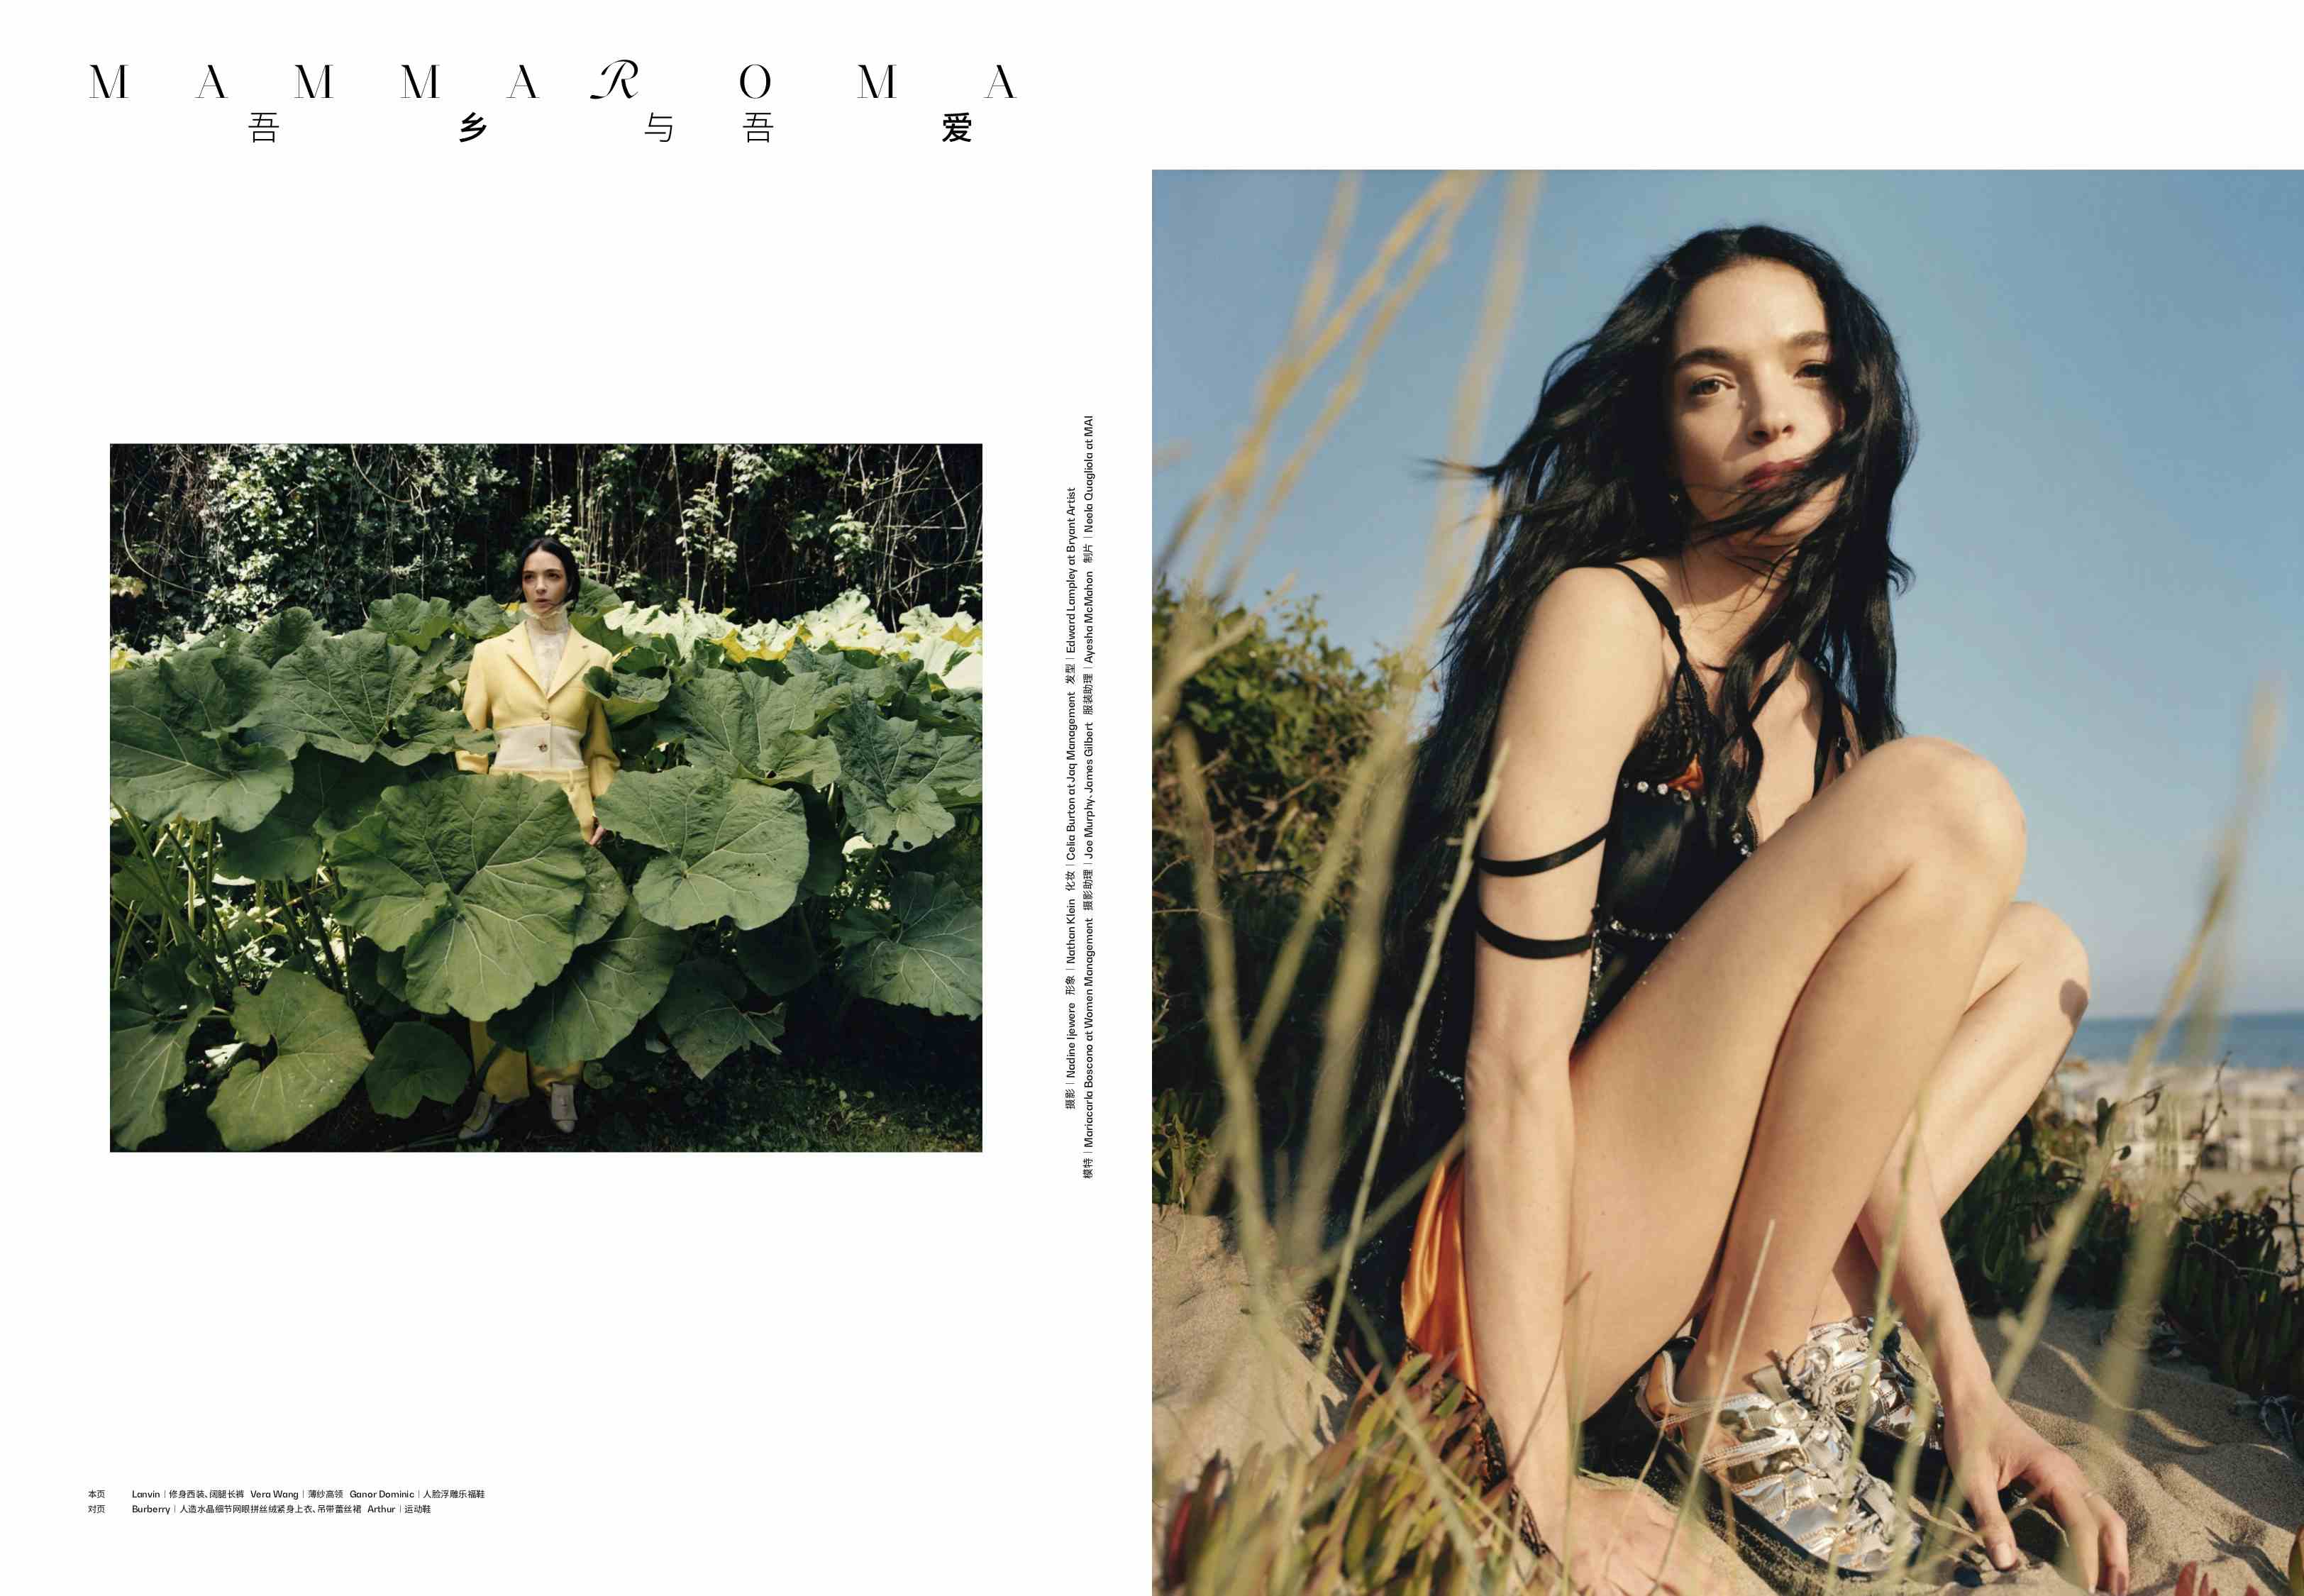 MODERN WEEKLY - 2019
Photographer: Nadine Ijewere
Model: Mariacarla Boscono
Stylist: Nathan Klein
Location: Rome